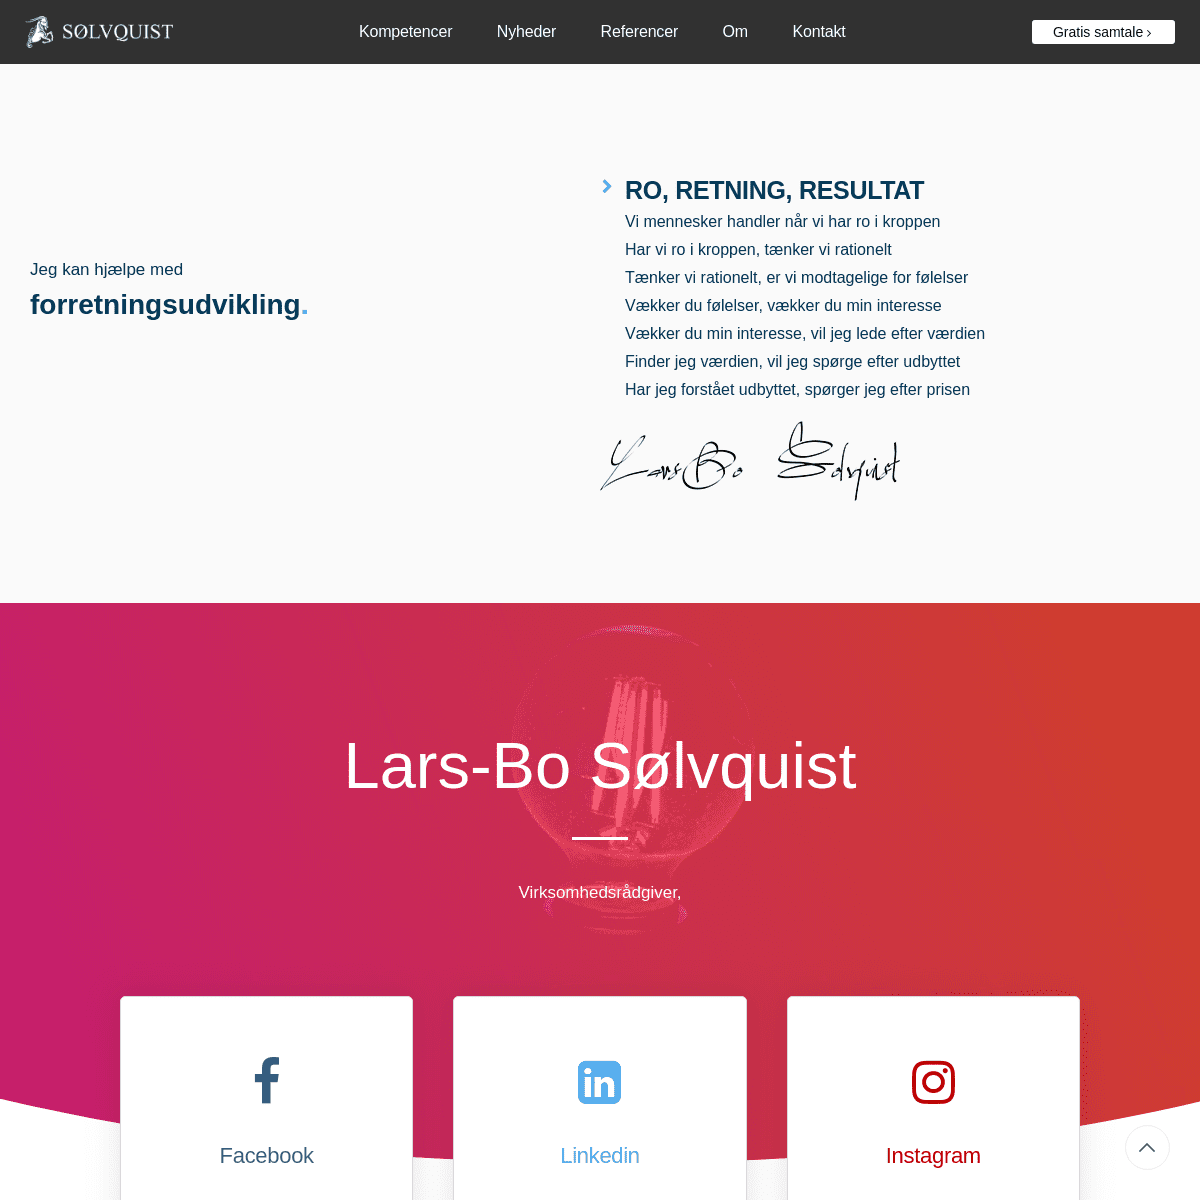 A complete backup of solvquist.com